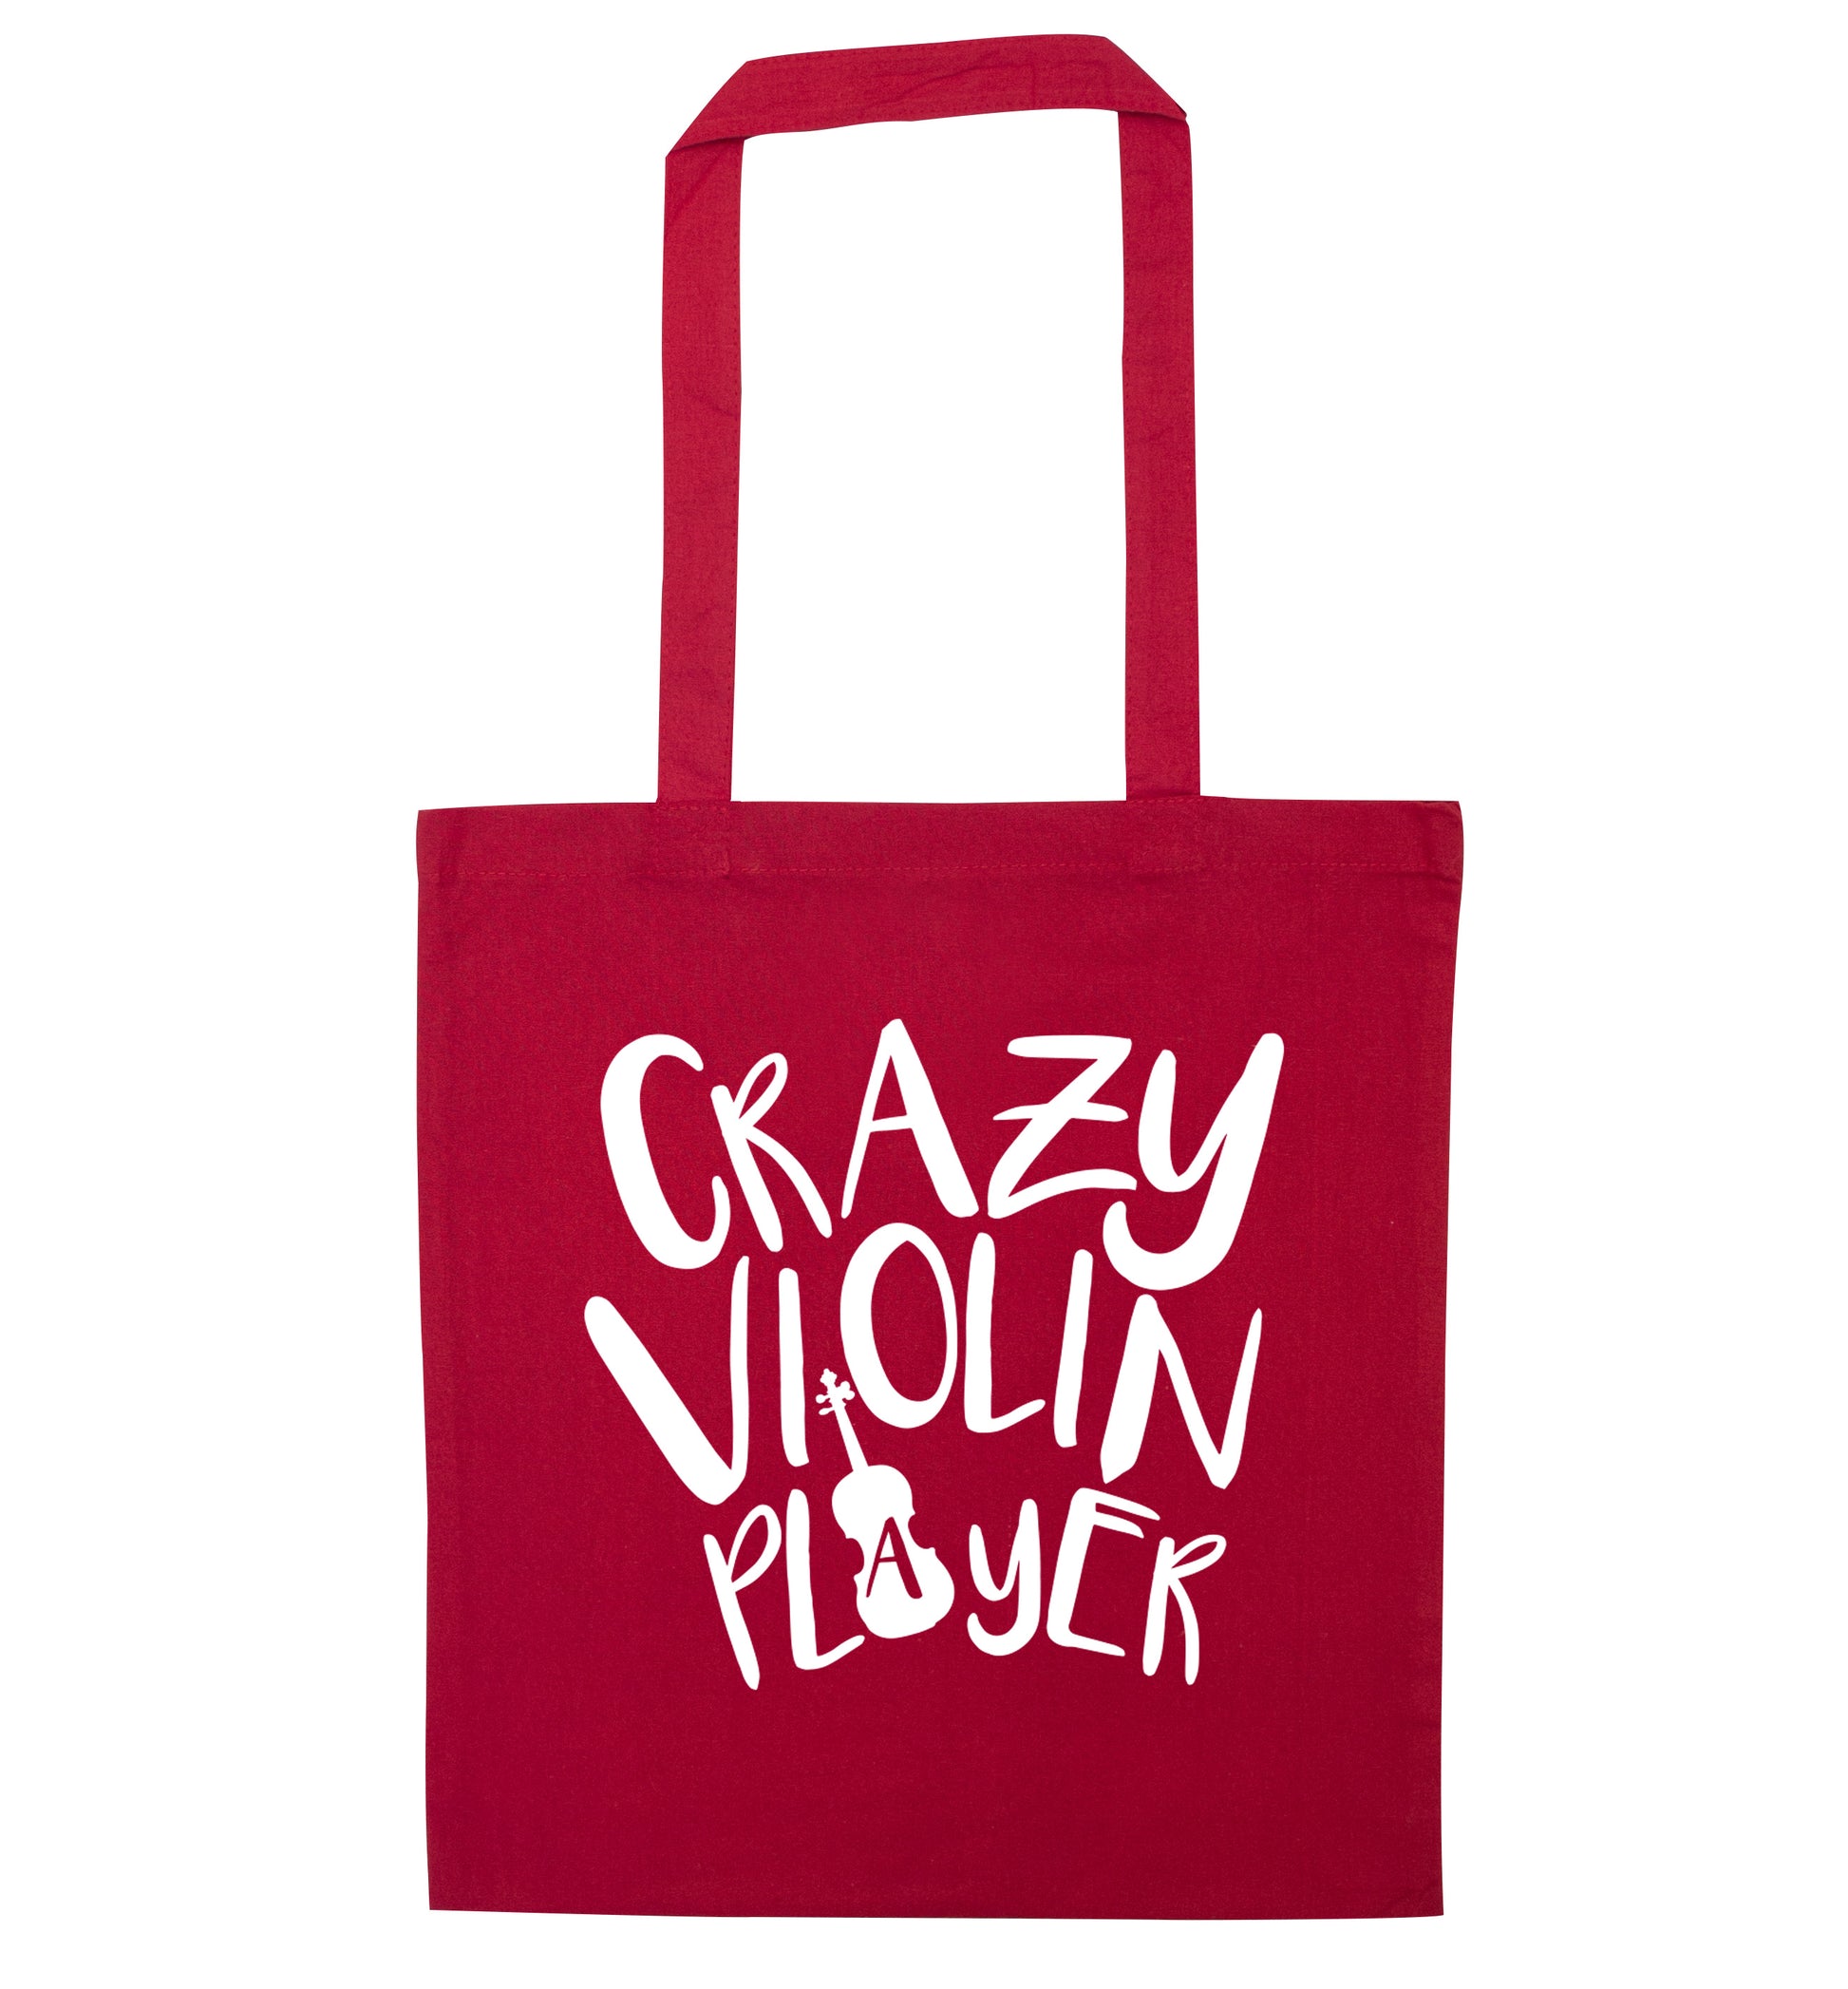 Crazy Violin Player red tote bag